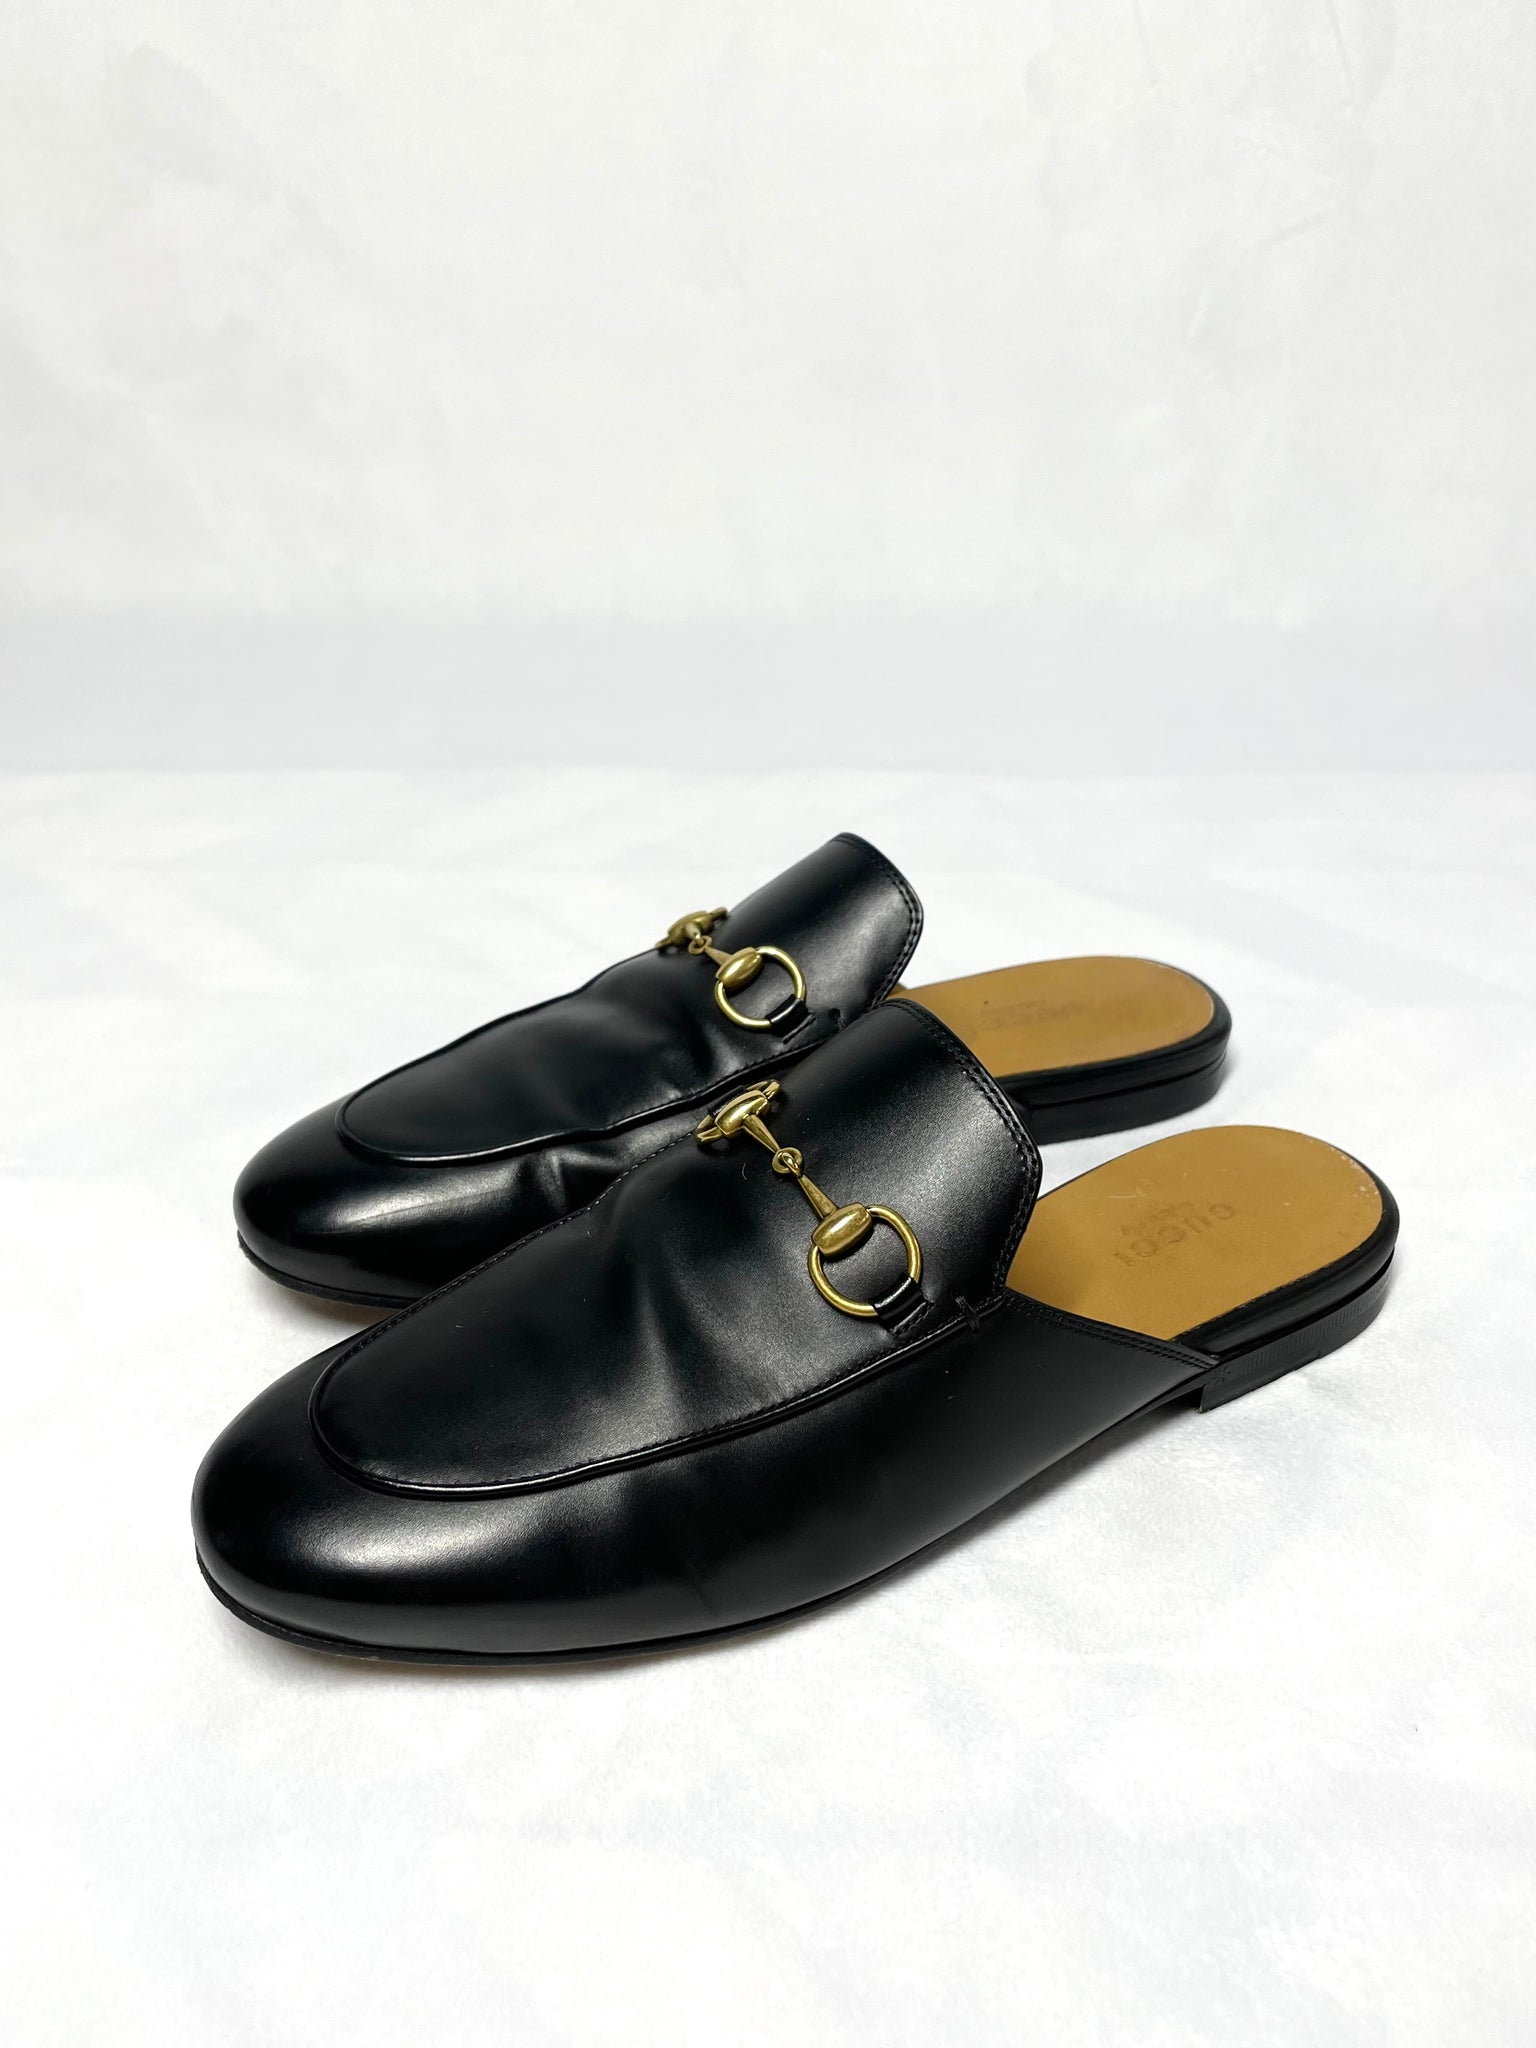 Gucci Princetown Black Leather Slides sz 7